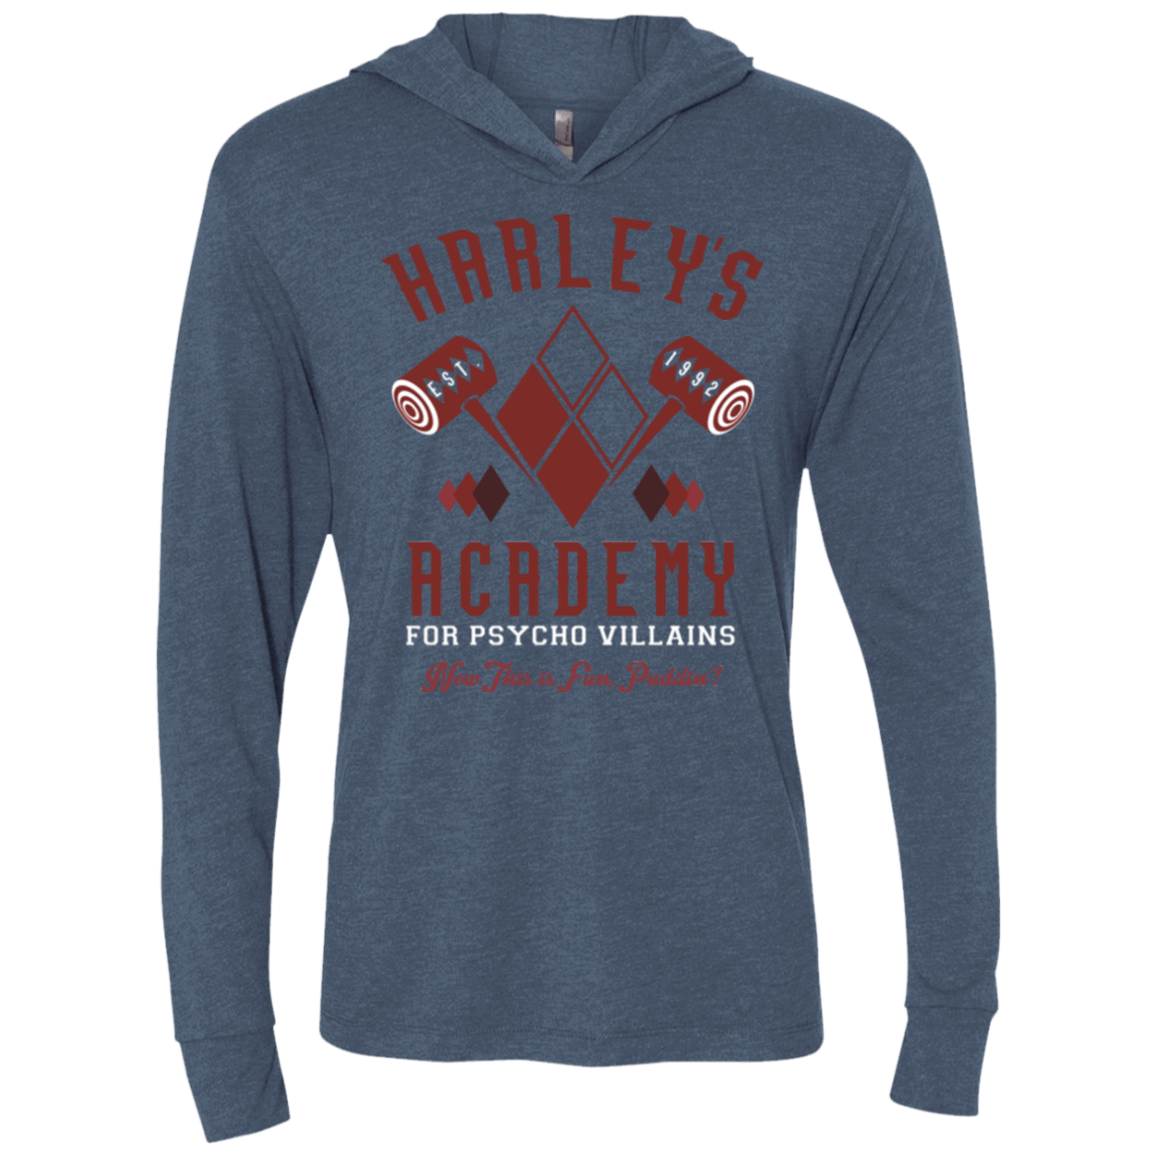 T-Shirts Indigo / X-Small Harley's Academy Triblend Long Sleeve Hoodie Tee